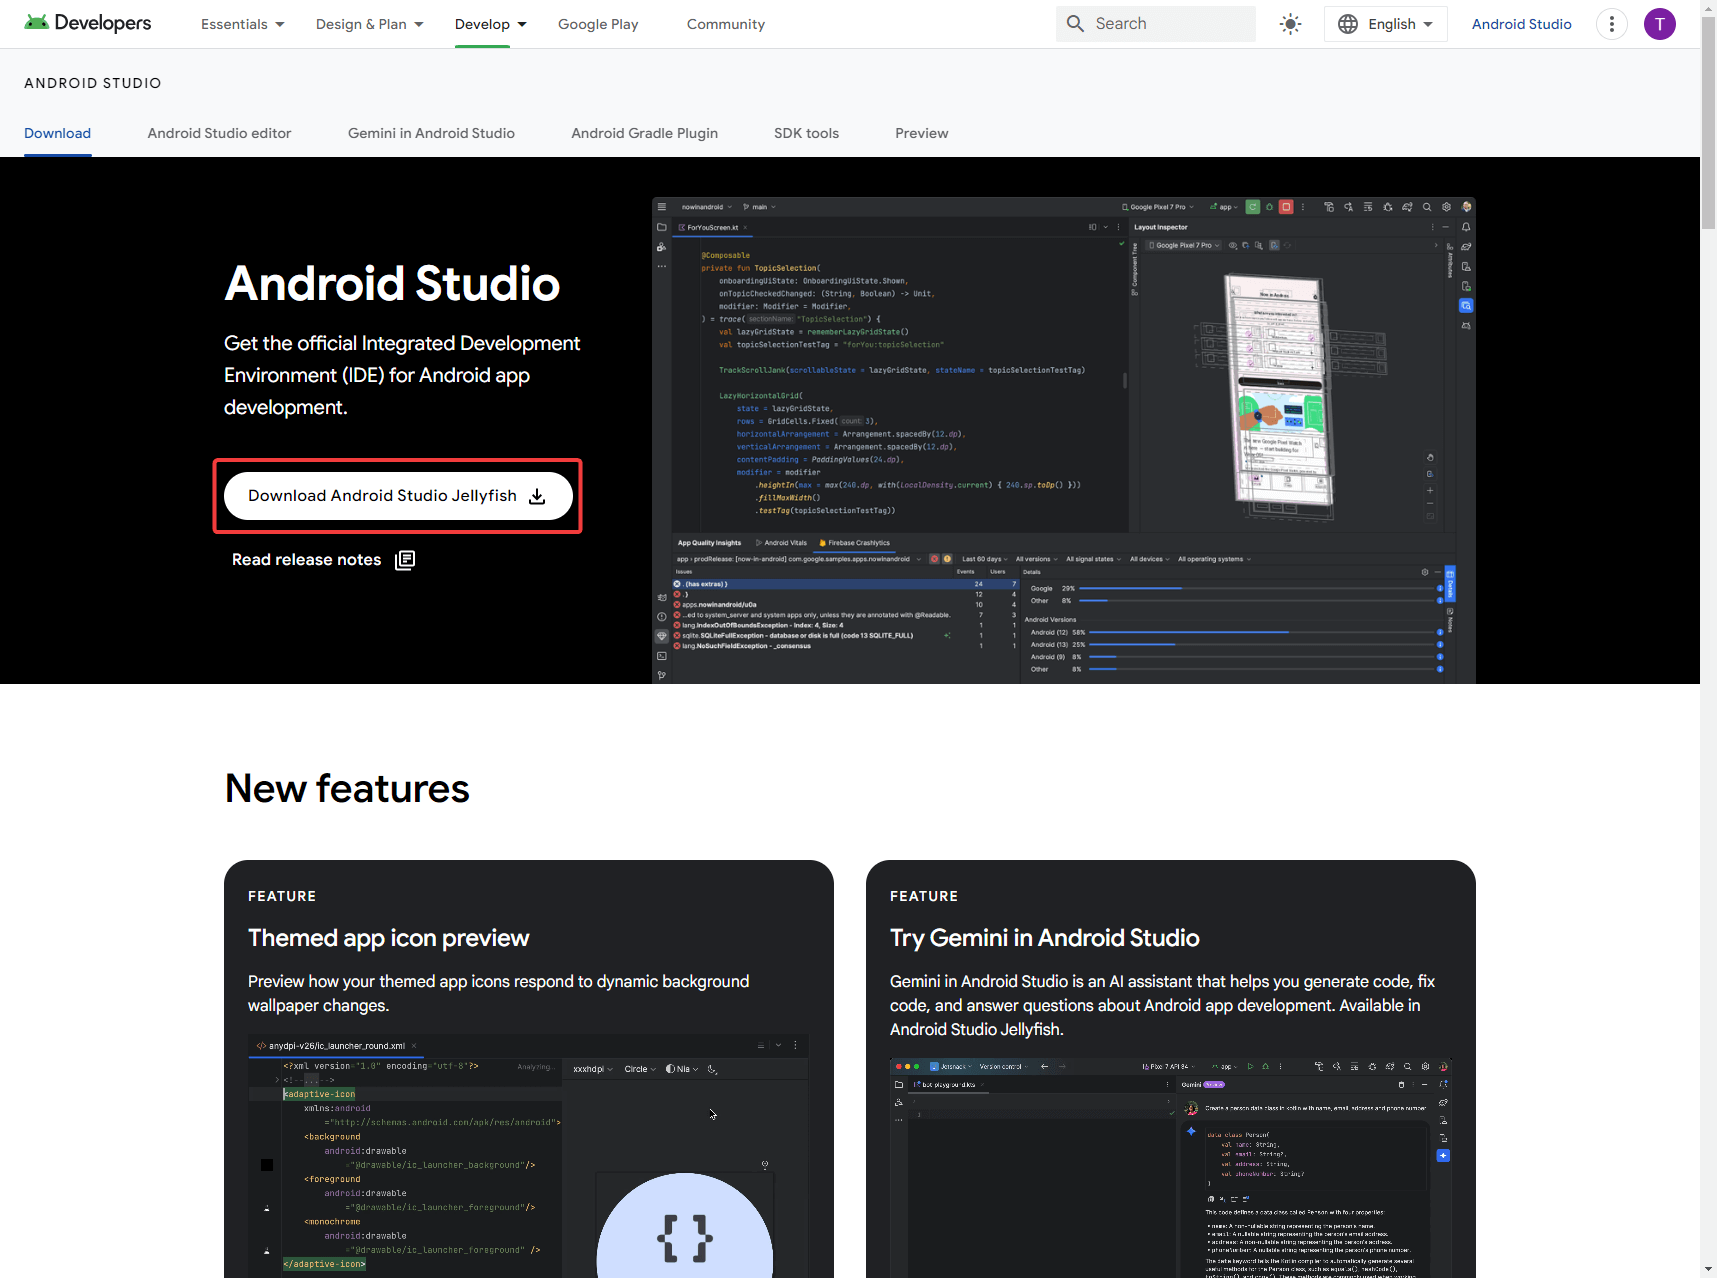 Android Studio website